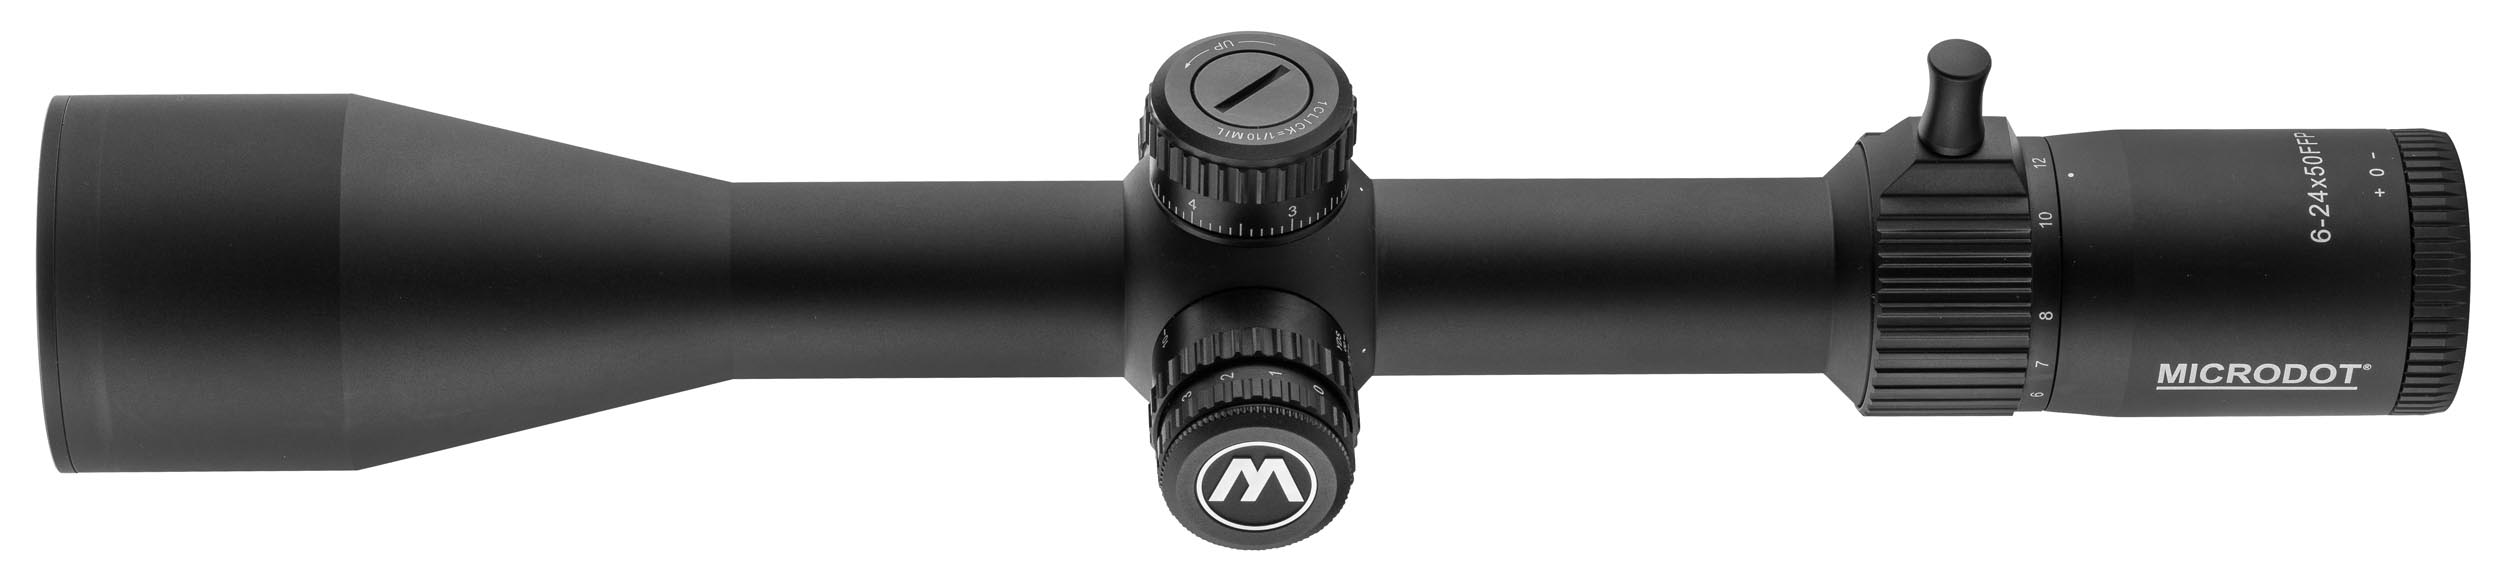 OCT6150I-5 MICRODOT 6-24x50 FFP MRAD Illuminated Riflescope